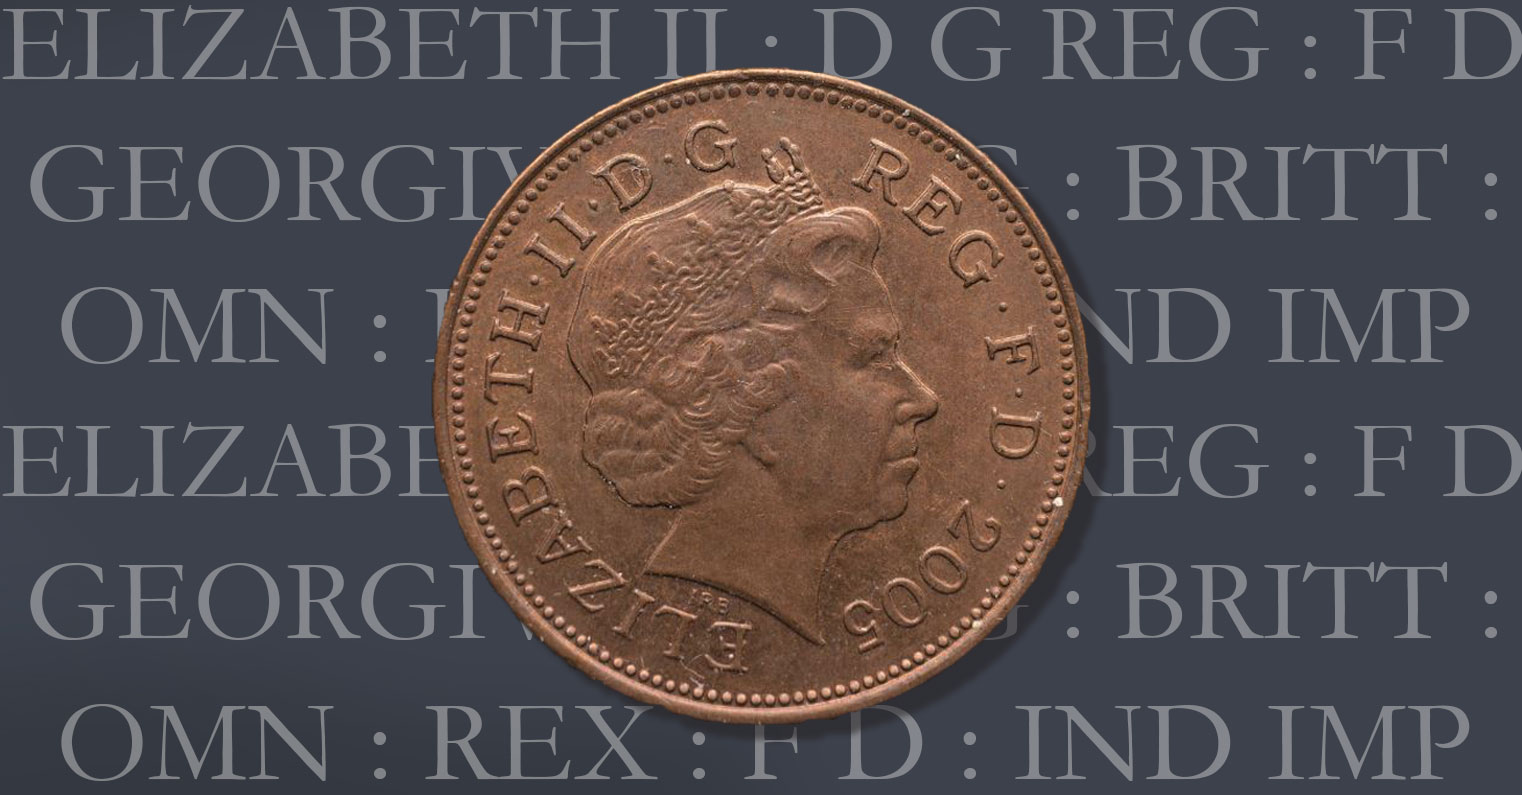 Latin inscriptions on British Coin